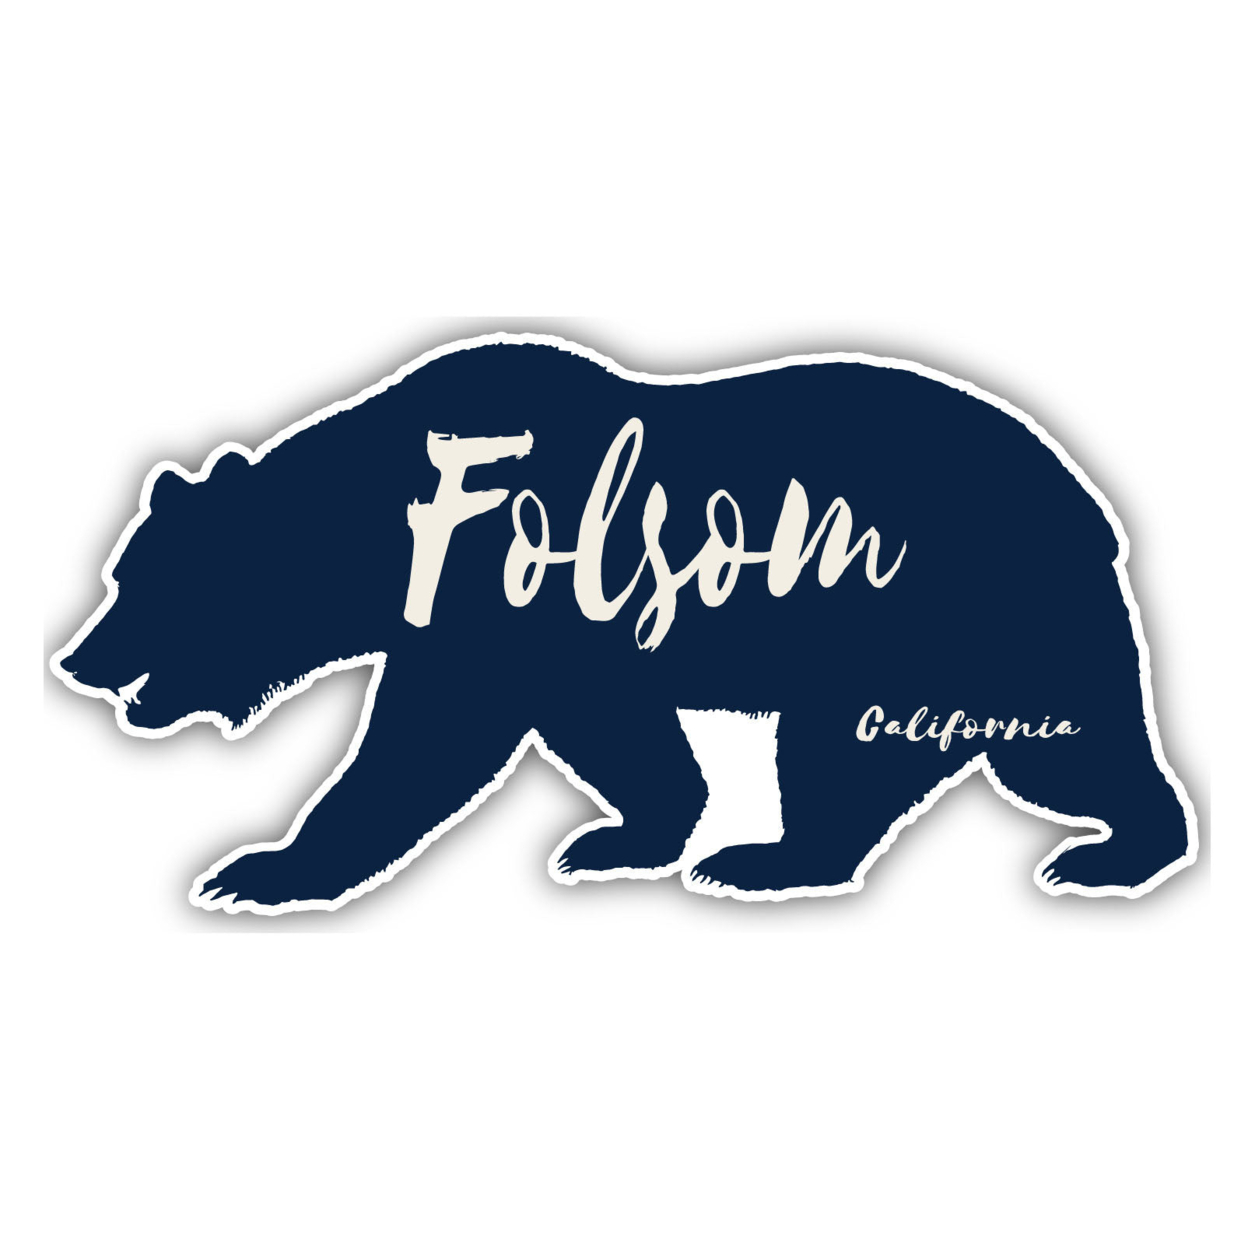 Folsom California Souvenir Decorative Stickers (Choose Theme And Size) - Single Unit, 10-Inch, Tent